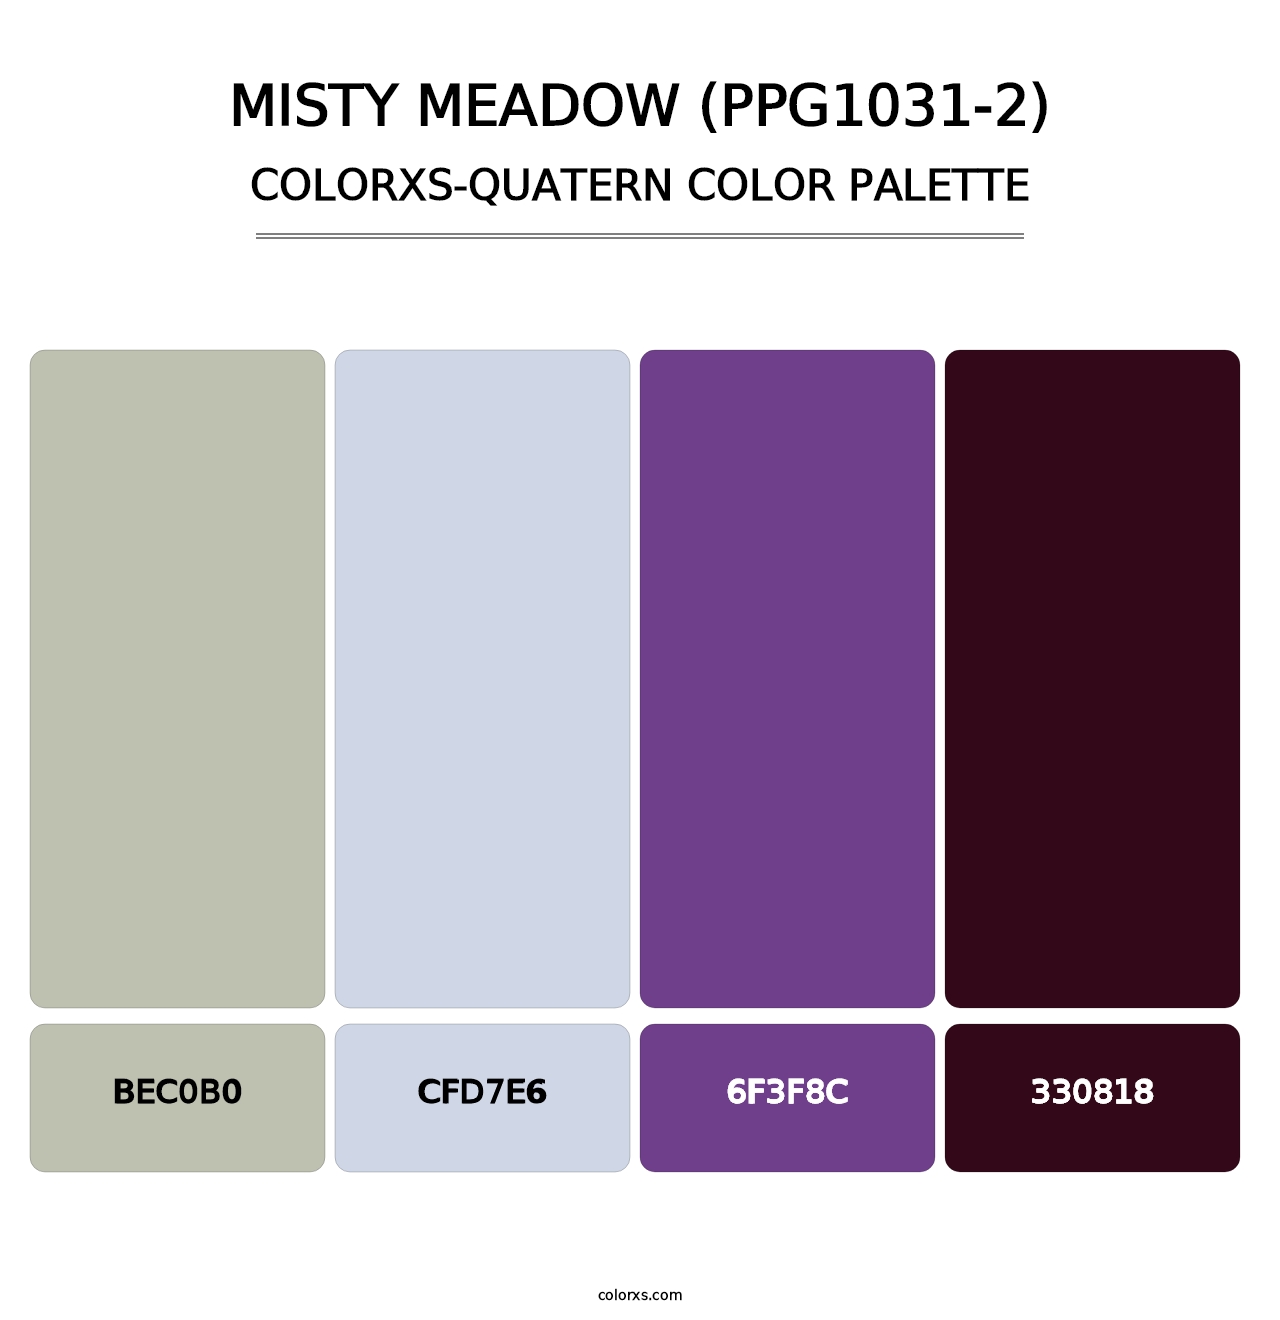 Misty Meadow (PPG1031-2) - Colorxs Quatern Palette